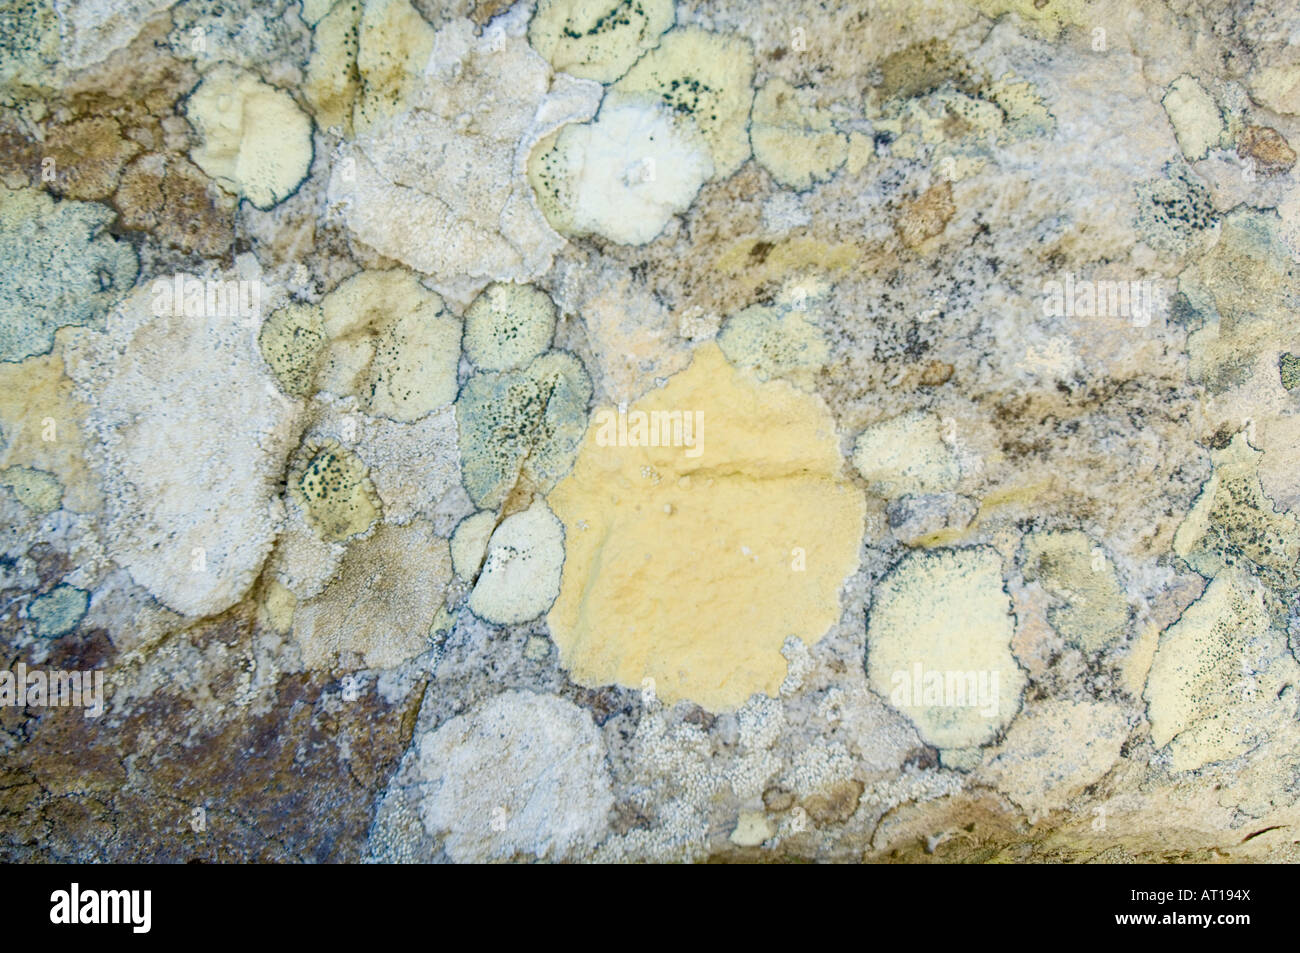 Variety of Lichen possibly Pertusaria macloviana and Lecanora capistrata cover quartzite rocks at Ordnance Point Gypsy Cove Stock Photo